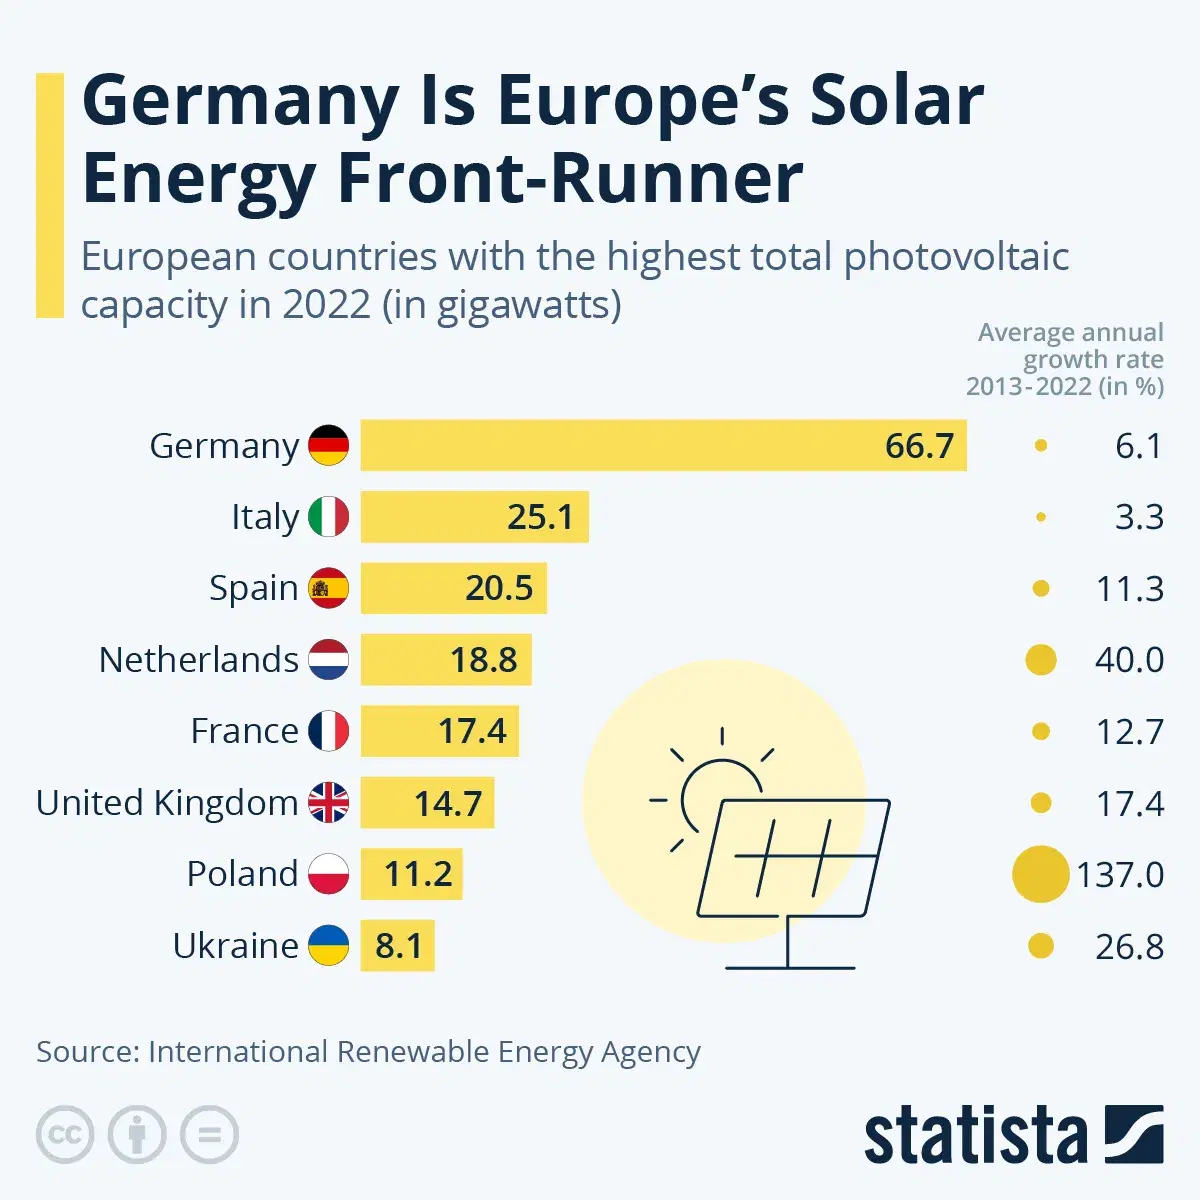 Germany Is Europe's Solar Energy Front-Runner